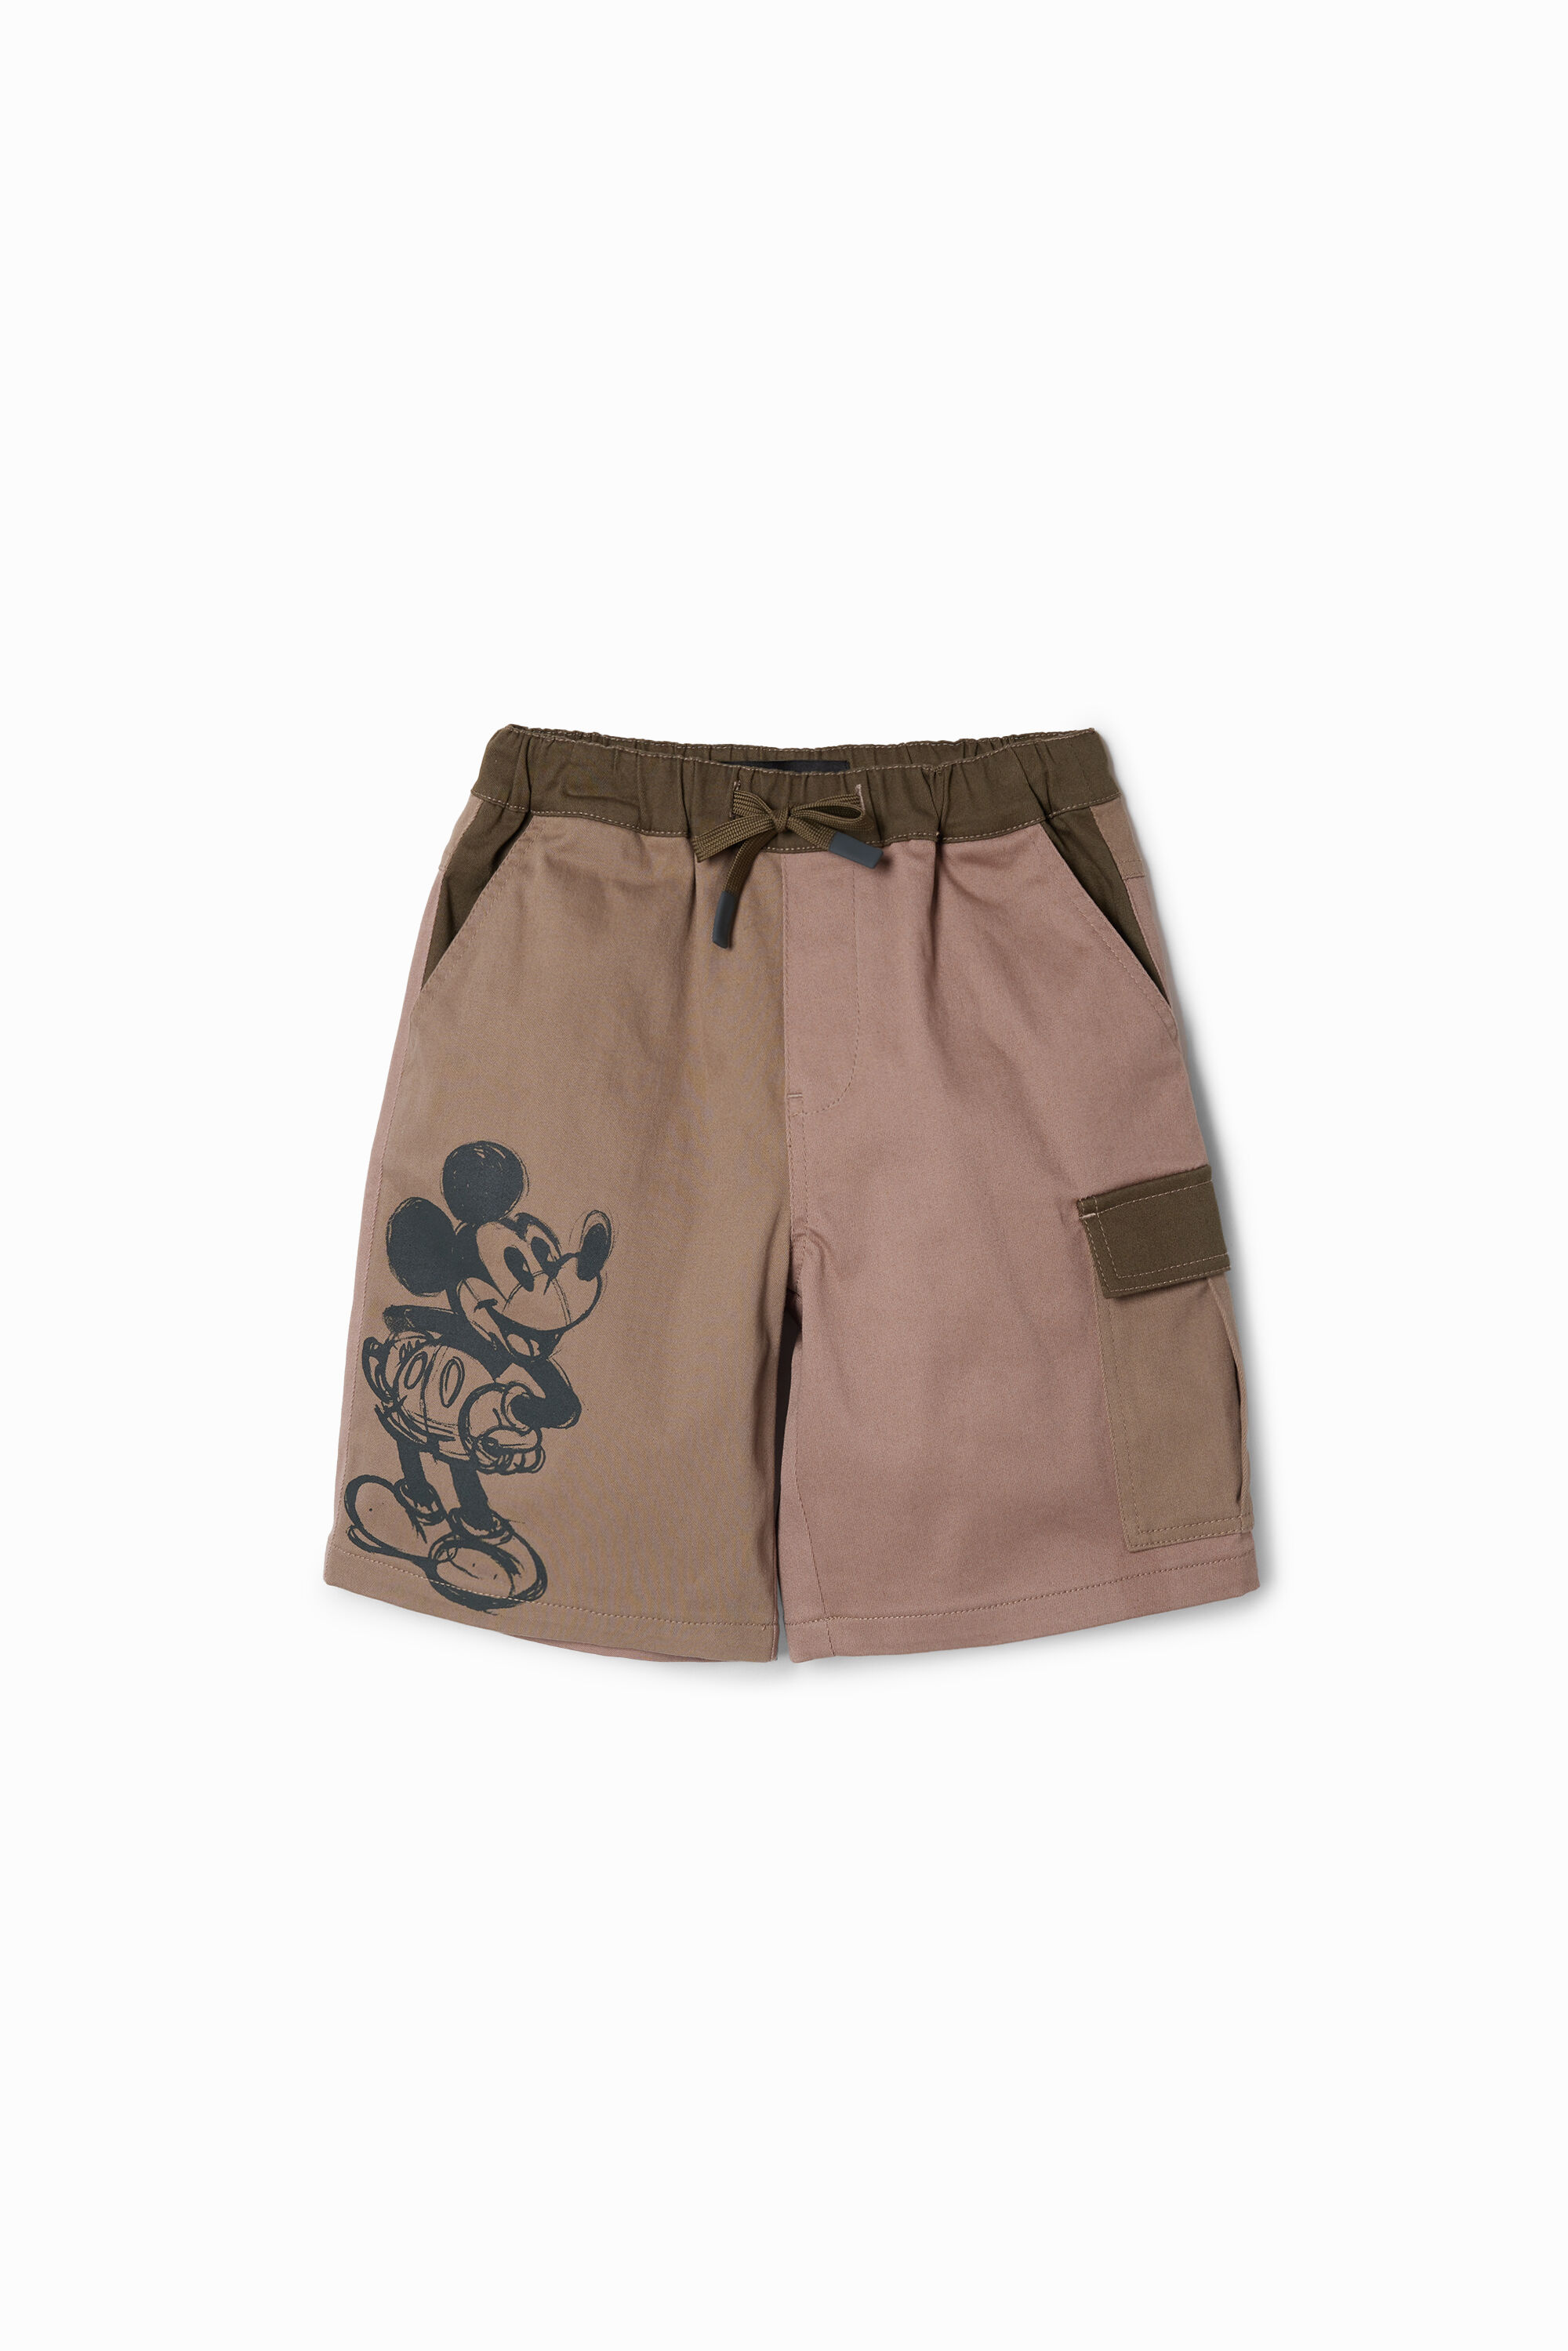 Desigual Patchwork Mickey Mouse Bermuda shorts